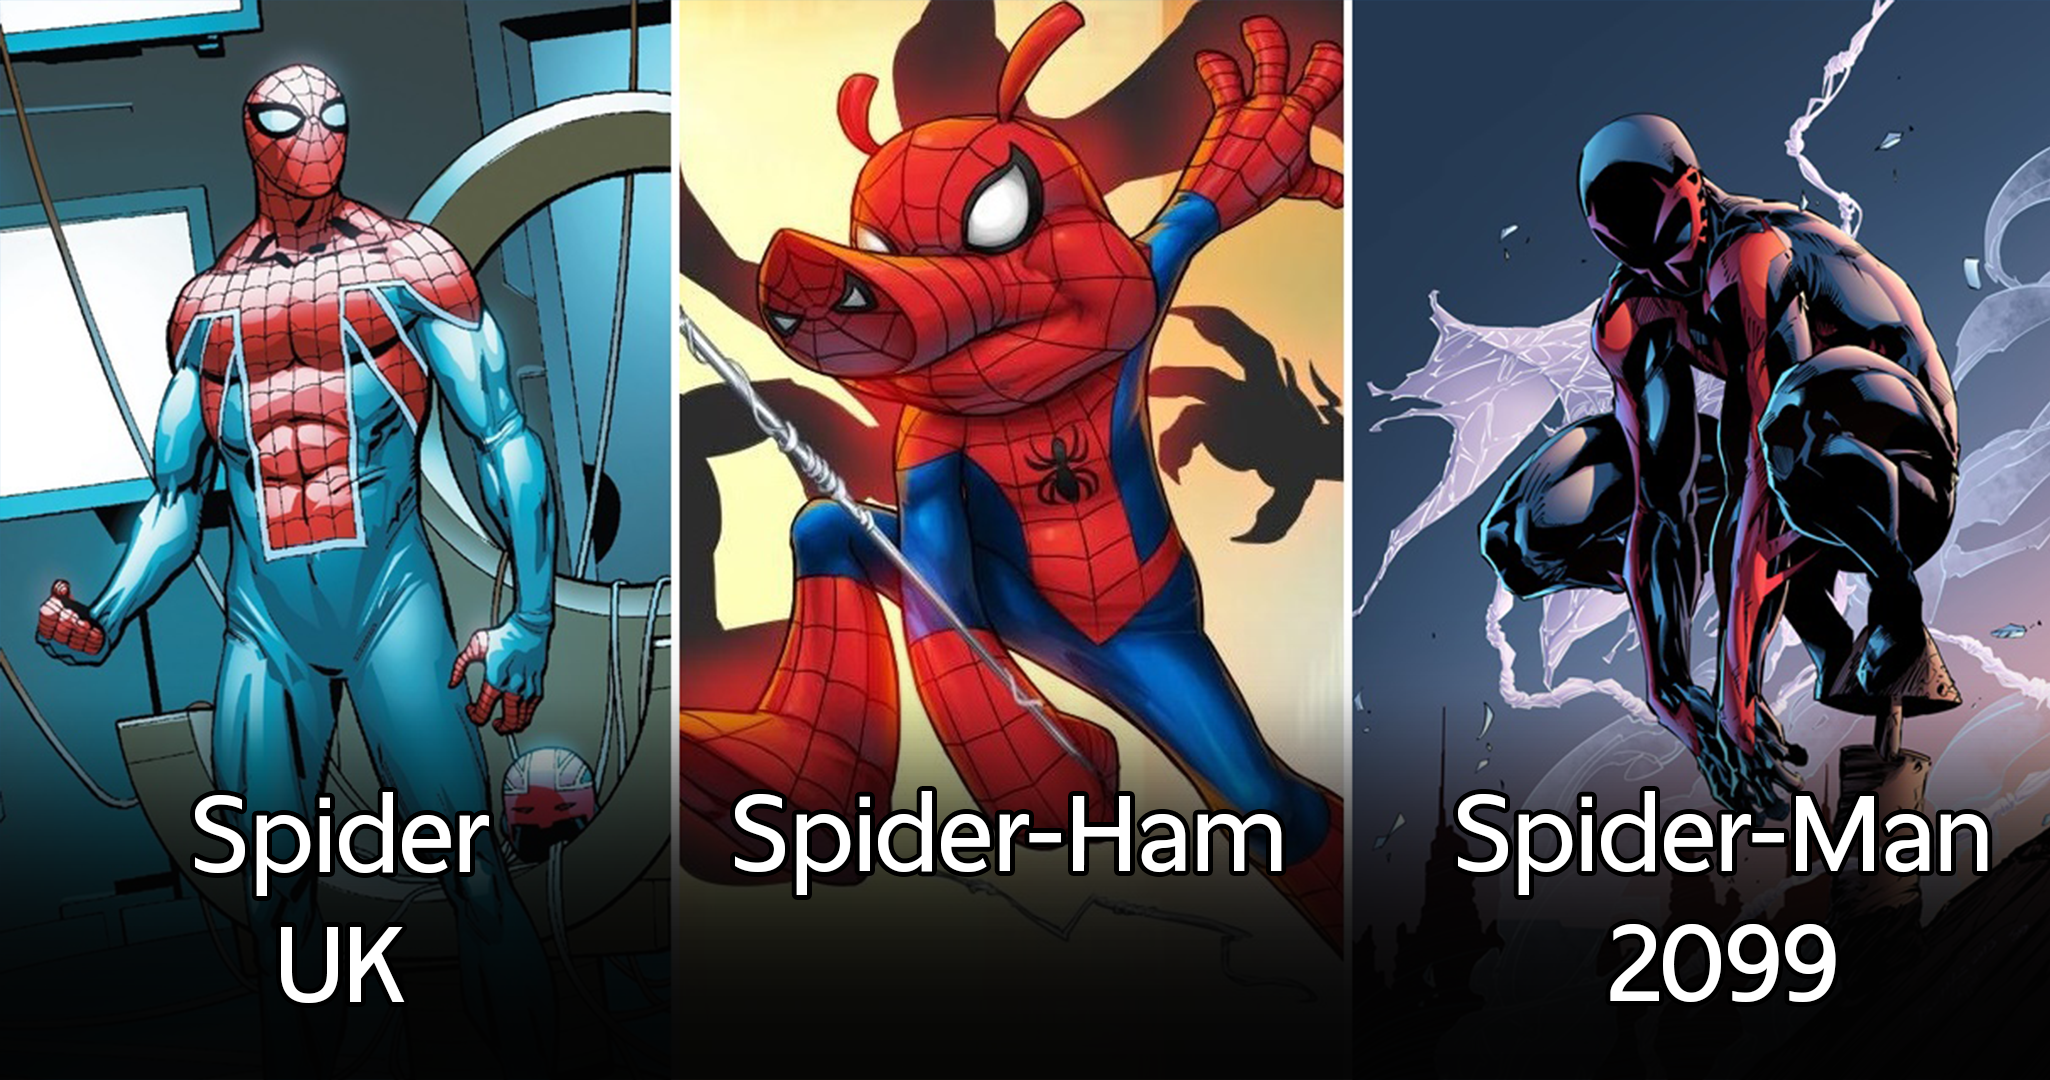 10 Spider-Man ที่ไม่ใช่ “Peter Parker” และอาจจะมาแจมในหนังภาคต่อ!!?